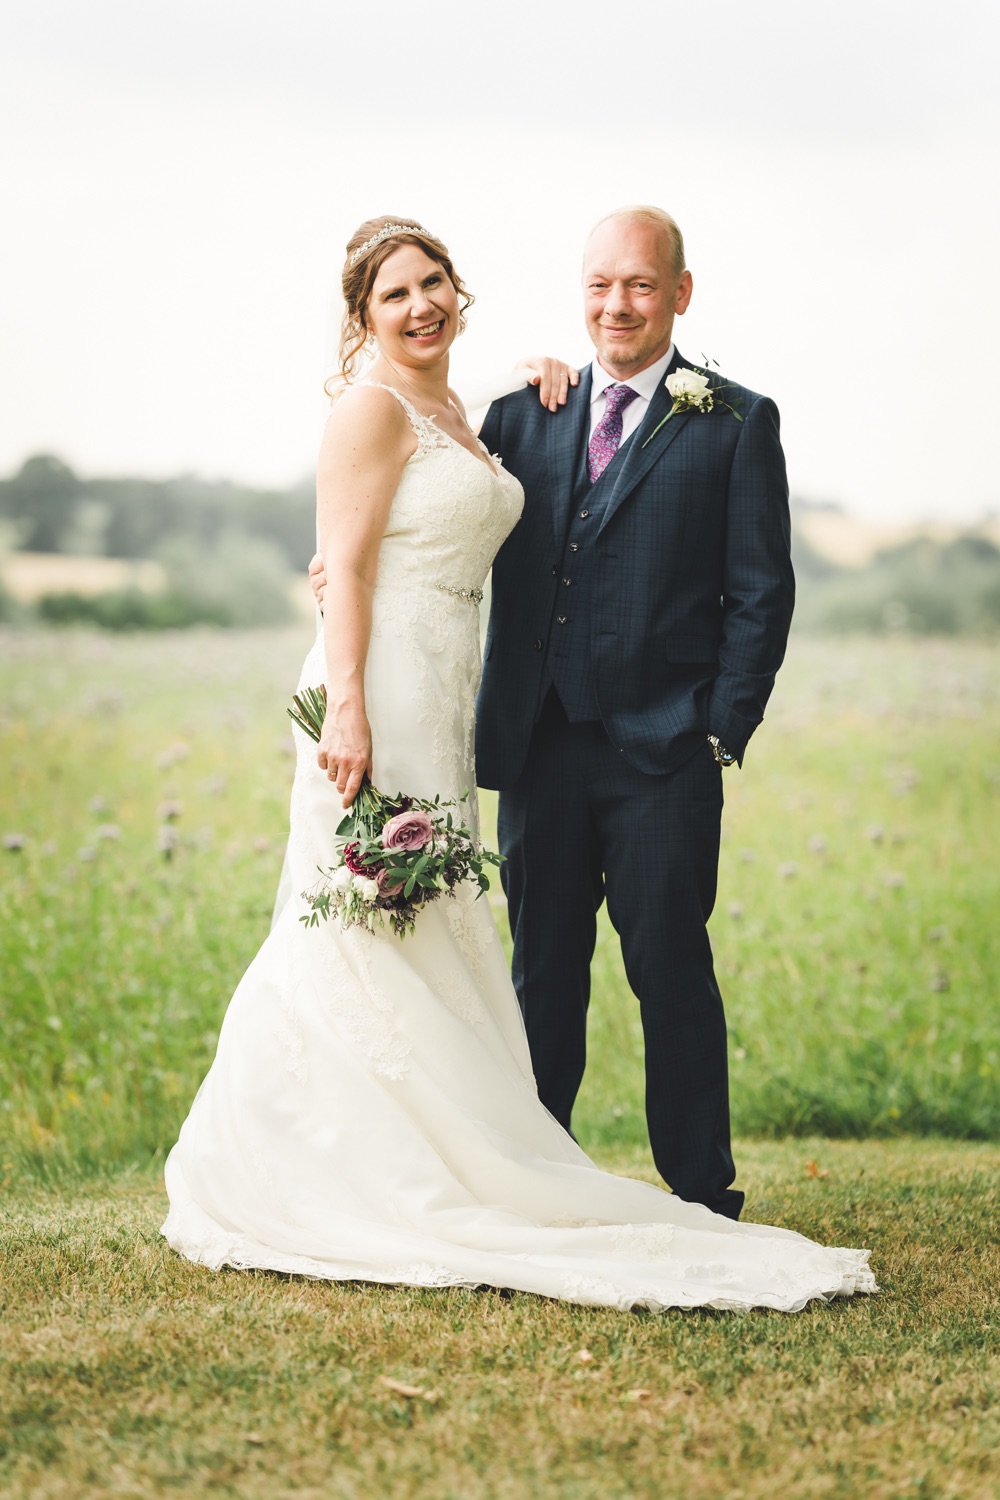 Smeetham Hall Barn Wedding Photographer | Suffolk Wedding Photographer | Ben Chapman Photos